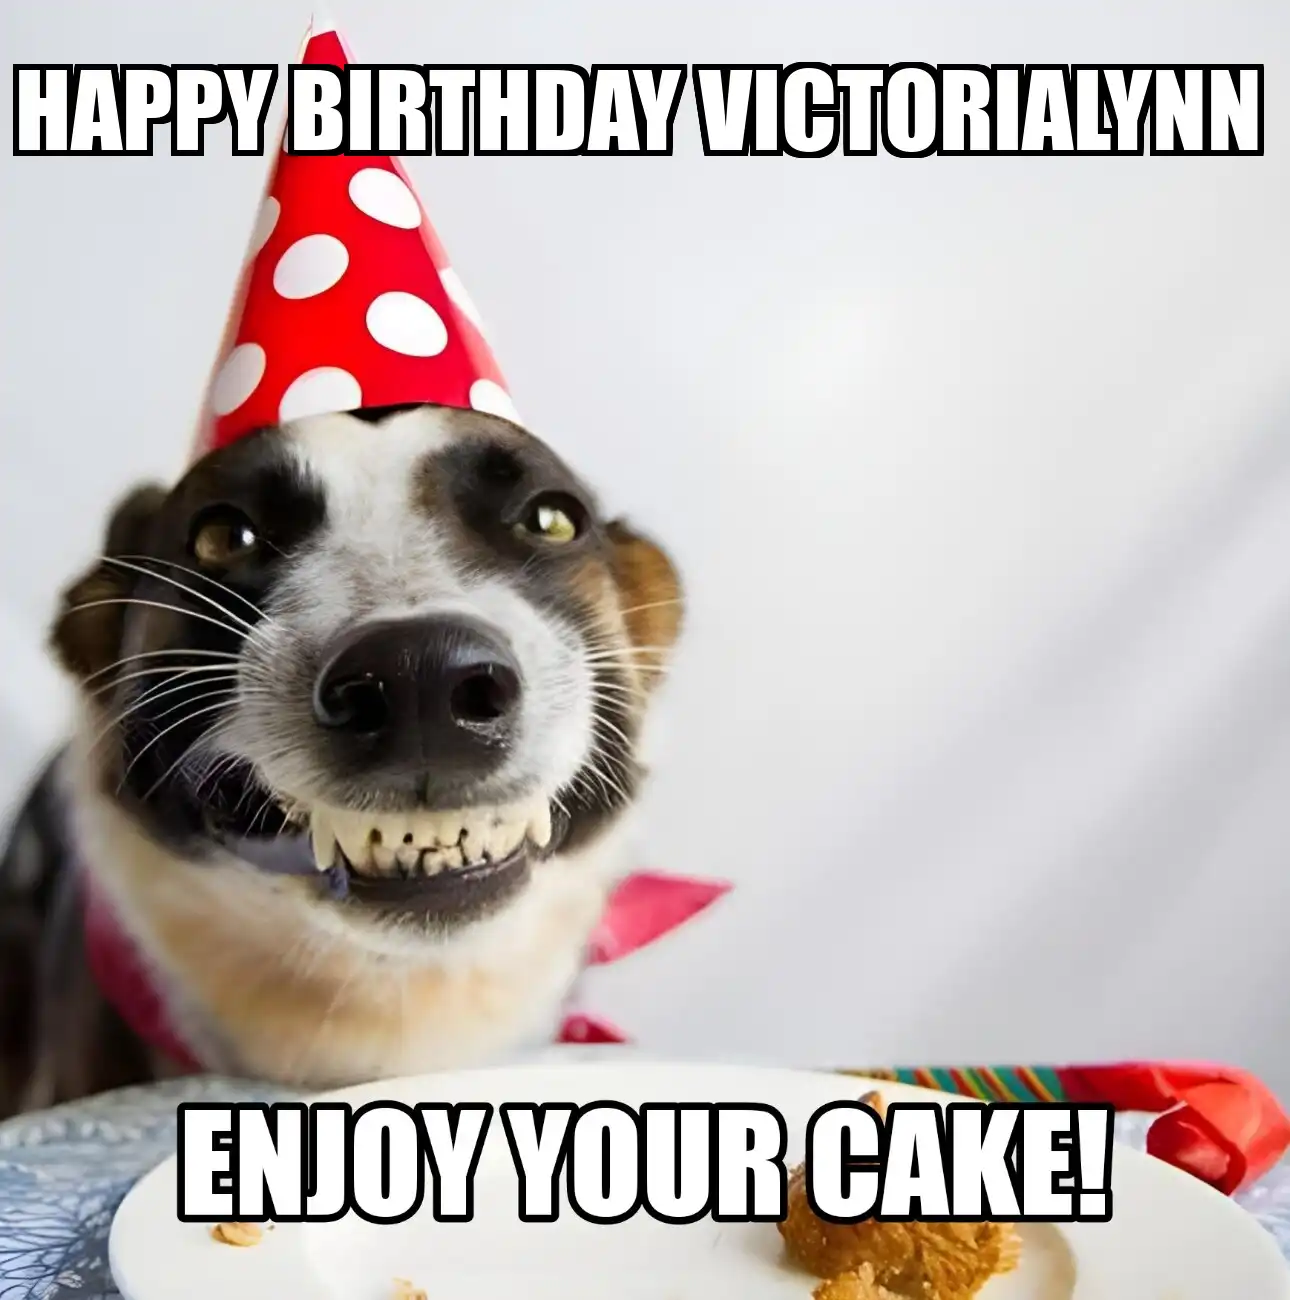 Happy Birthday Victorialynn Enjoy Your Cake Dog Meme